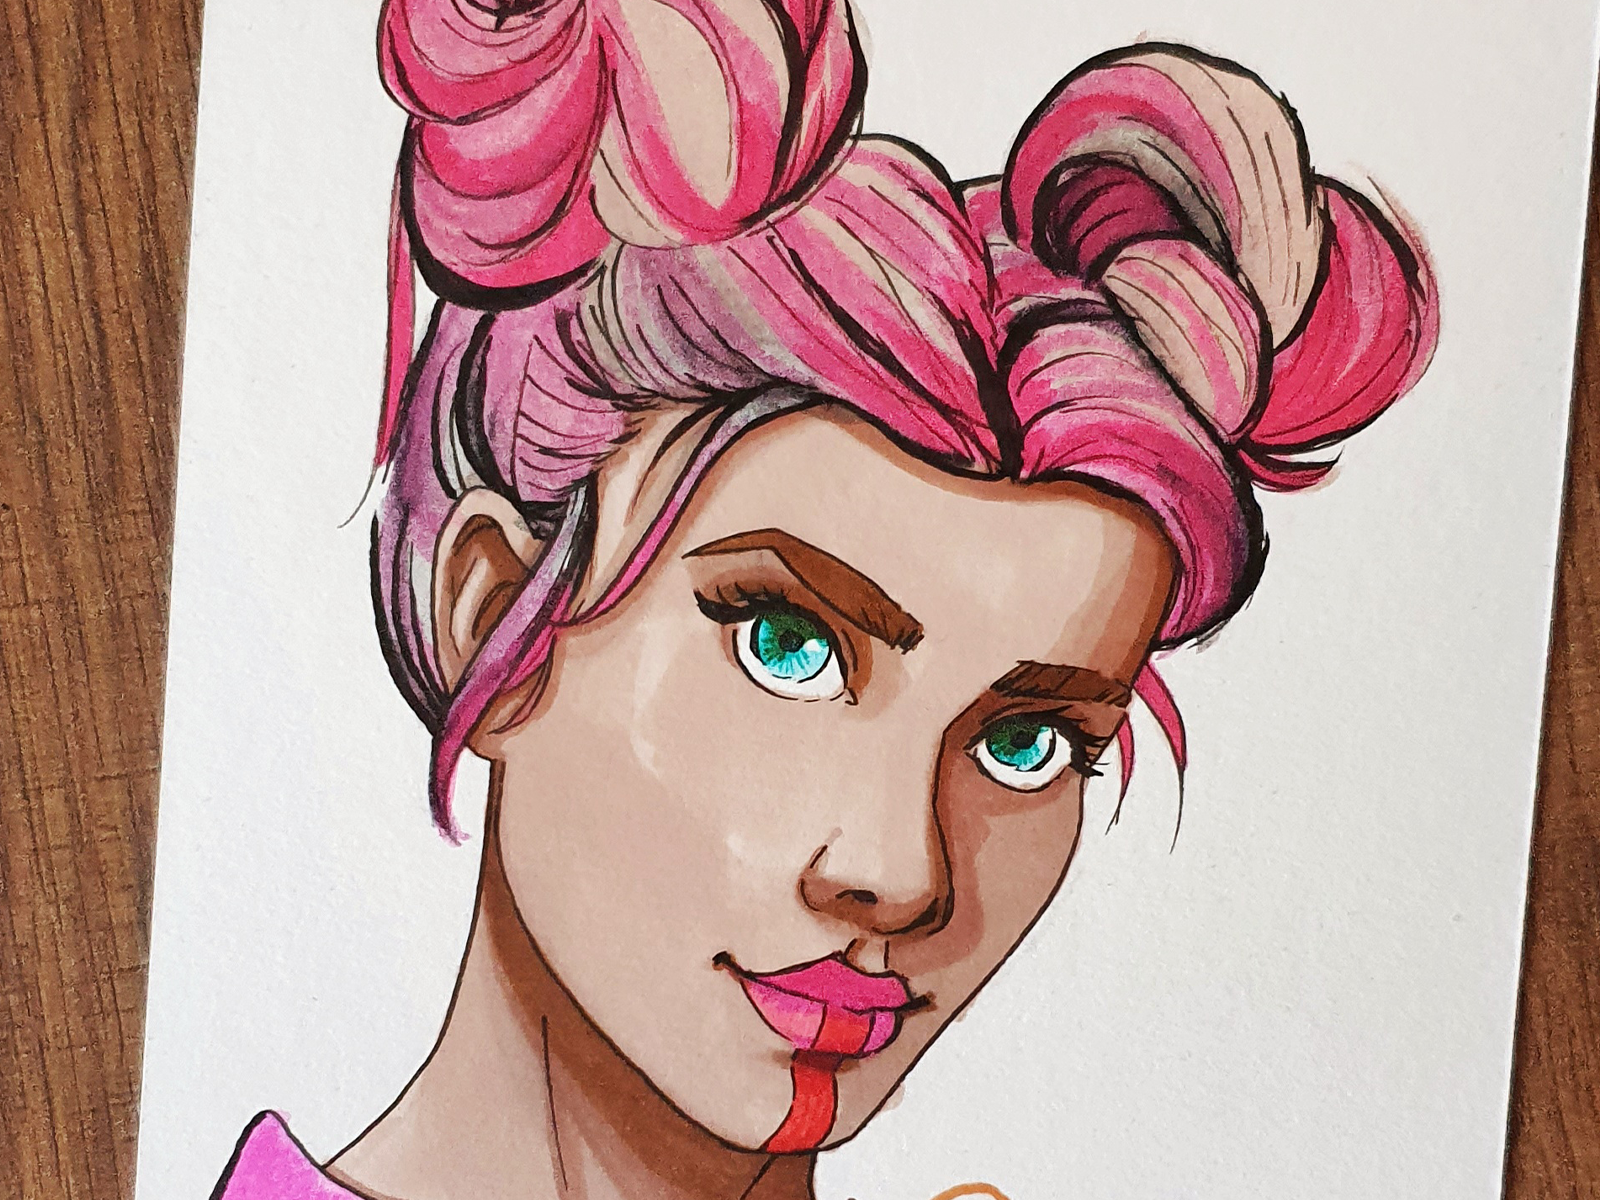 Pink hair girl by Katarzyna Kosobucka on Dribbble